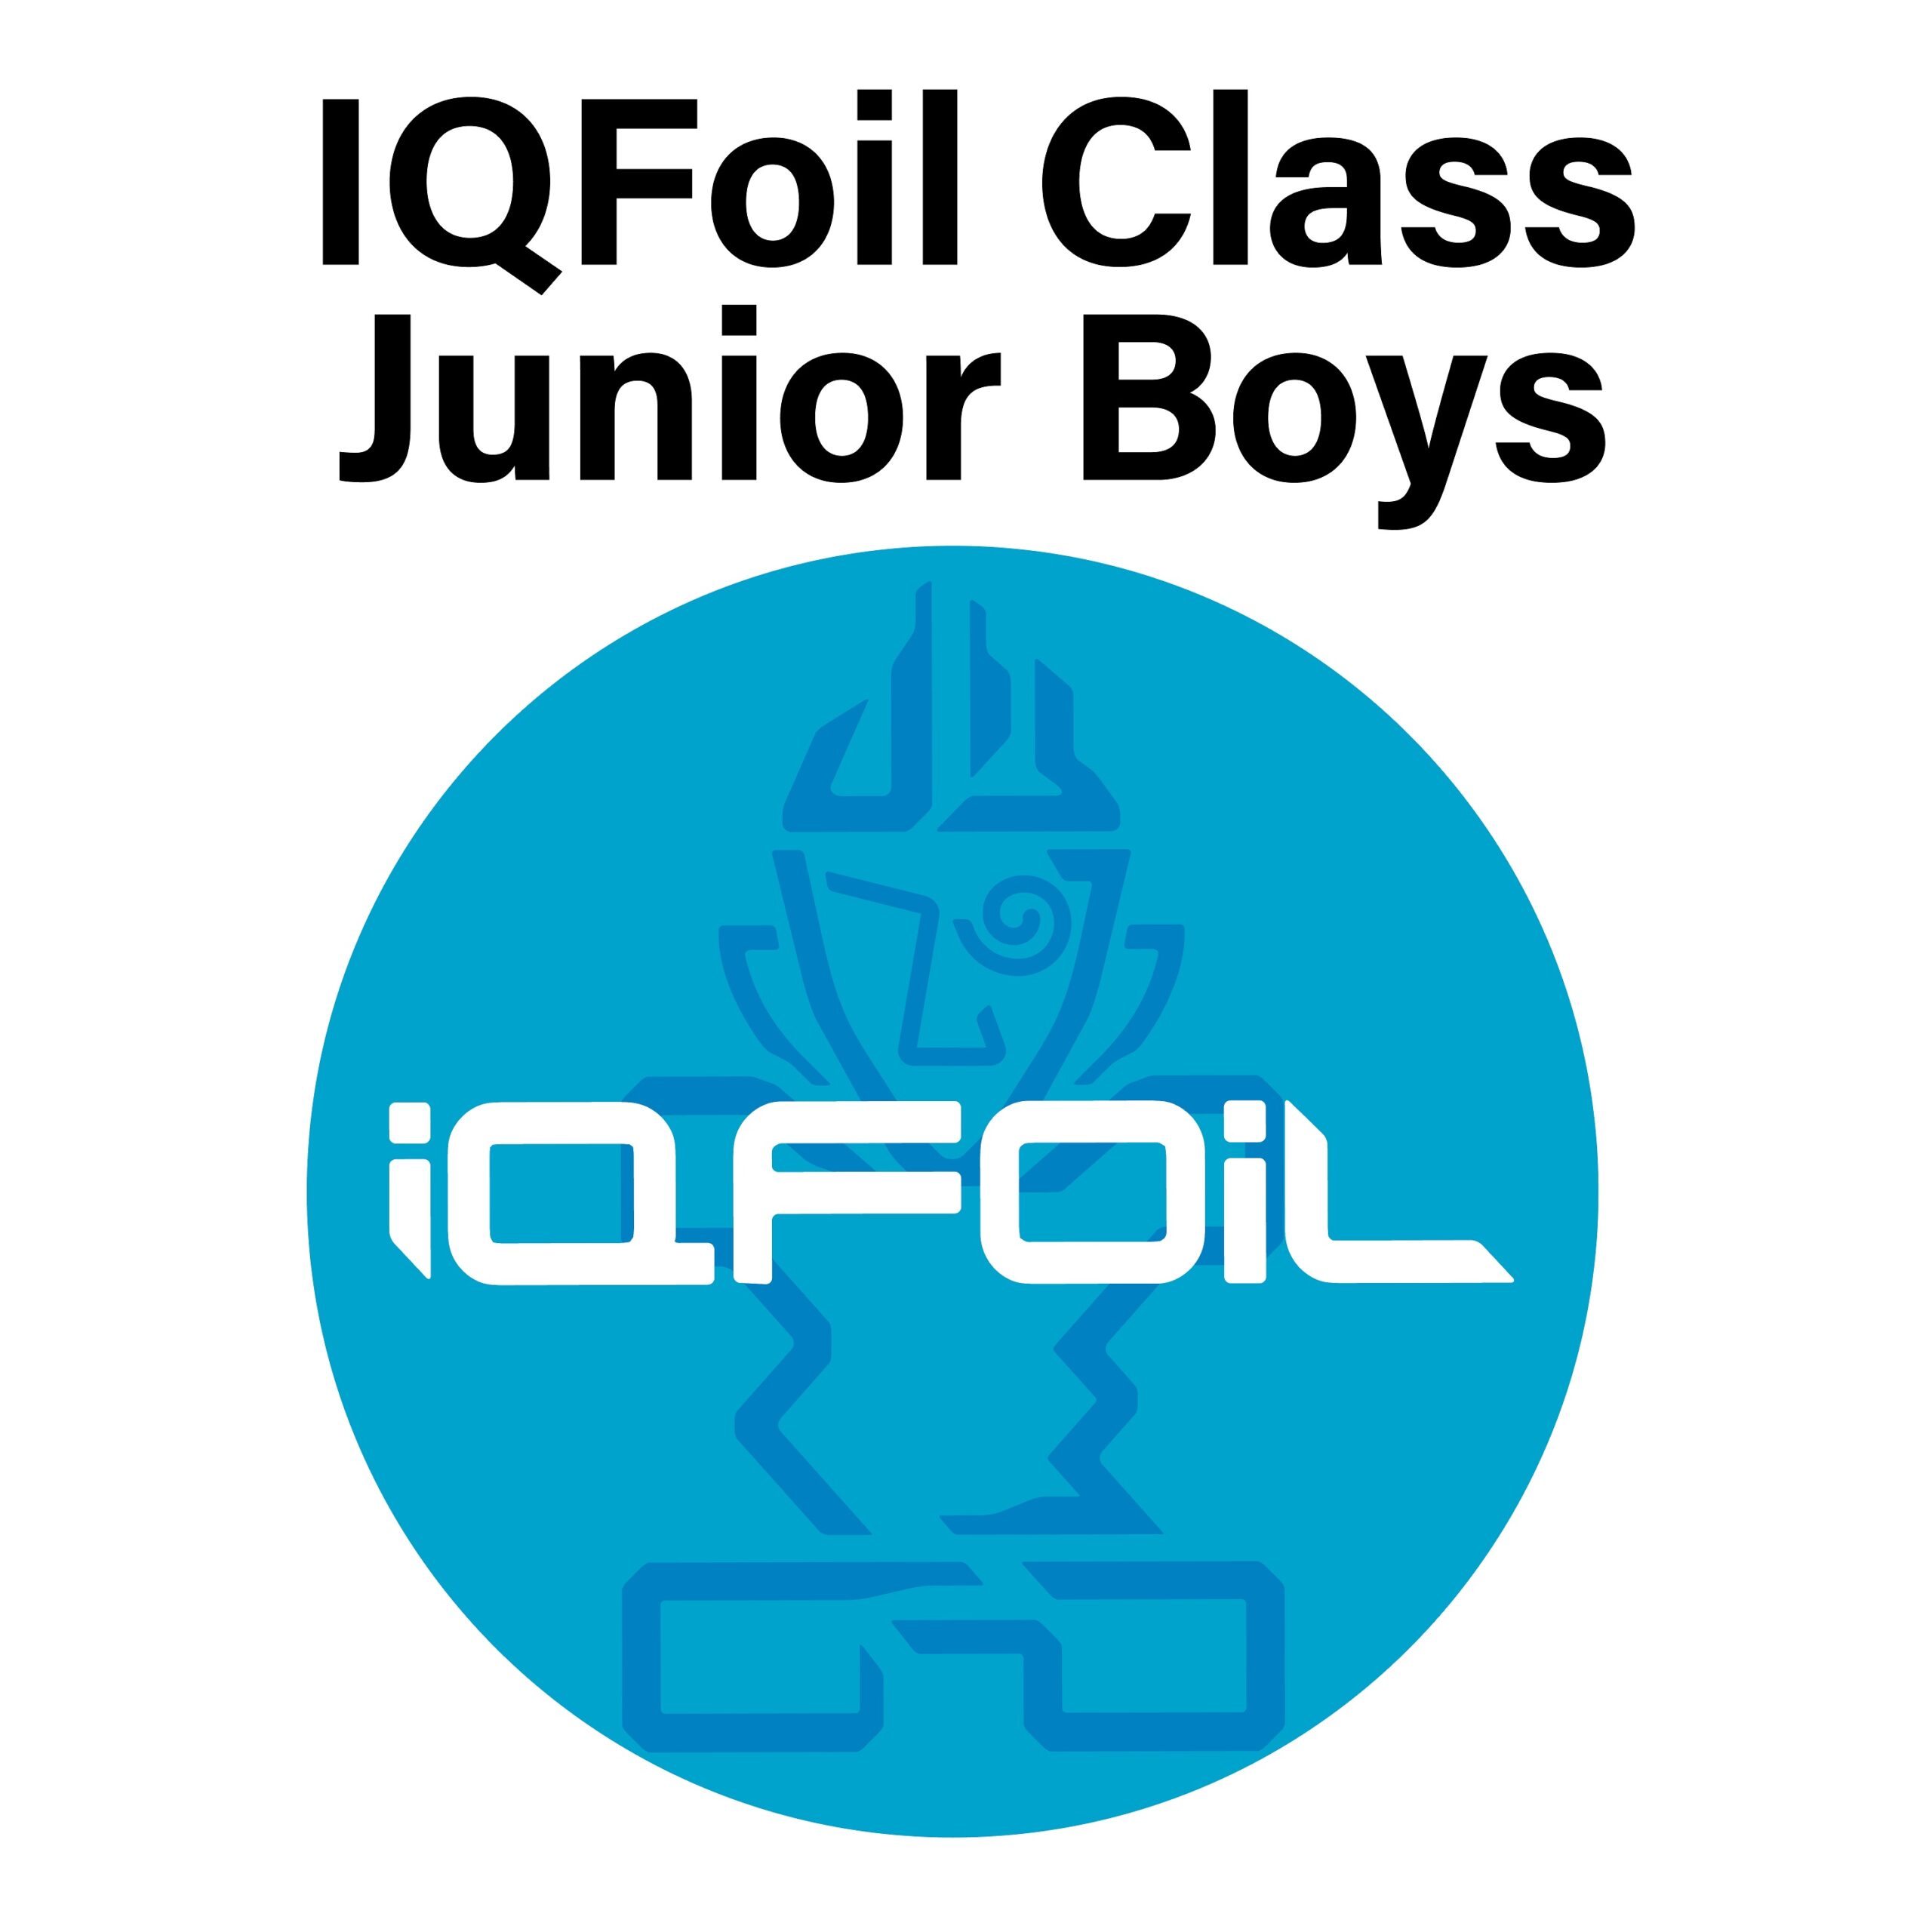 IQ Foil Class Junior Boys